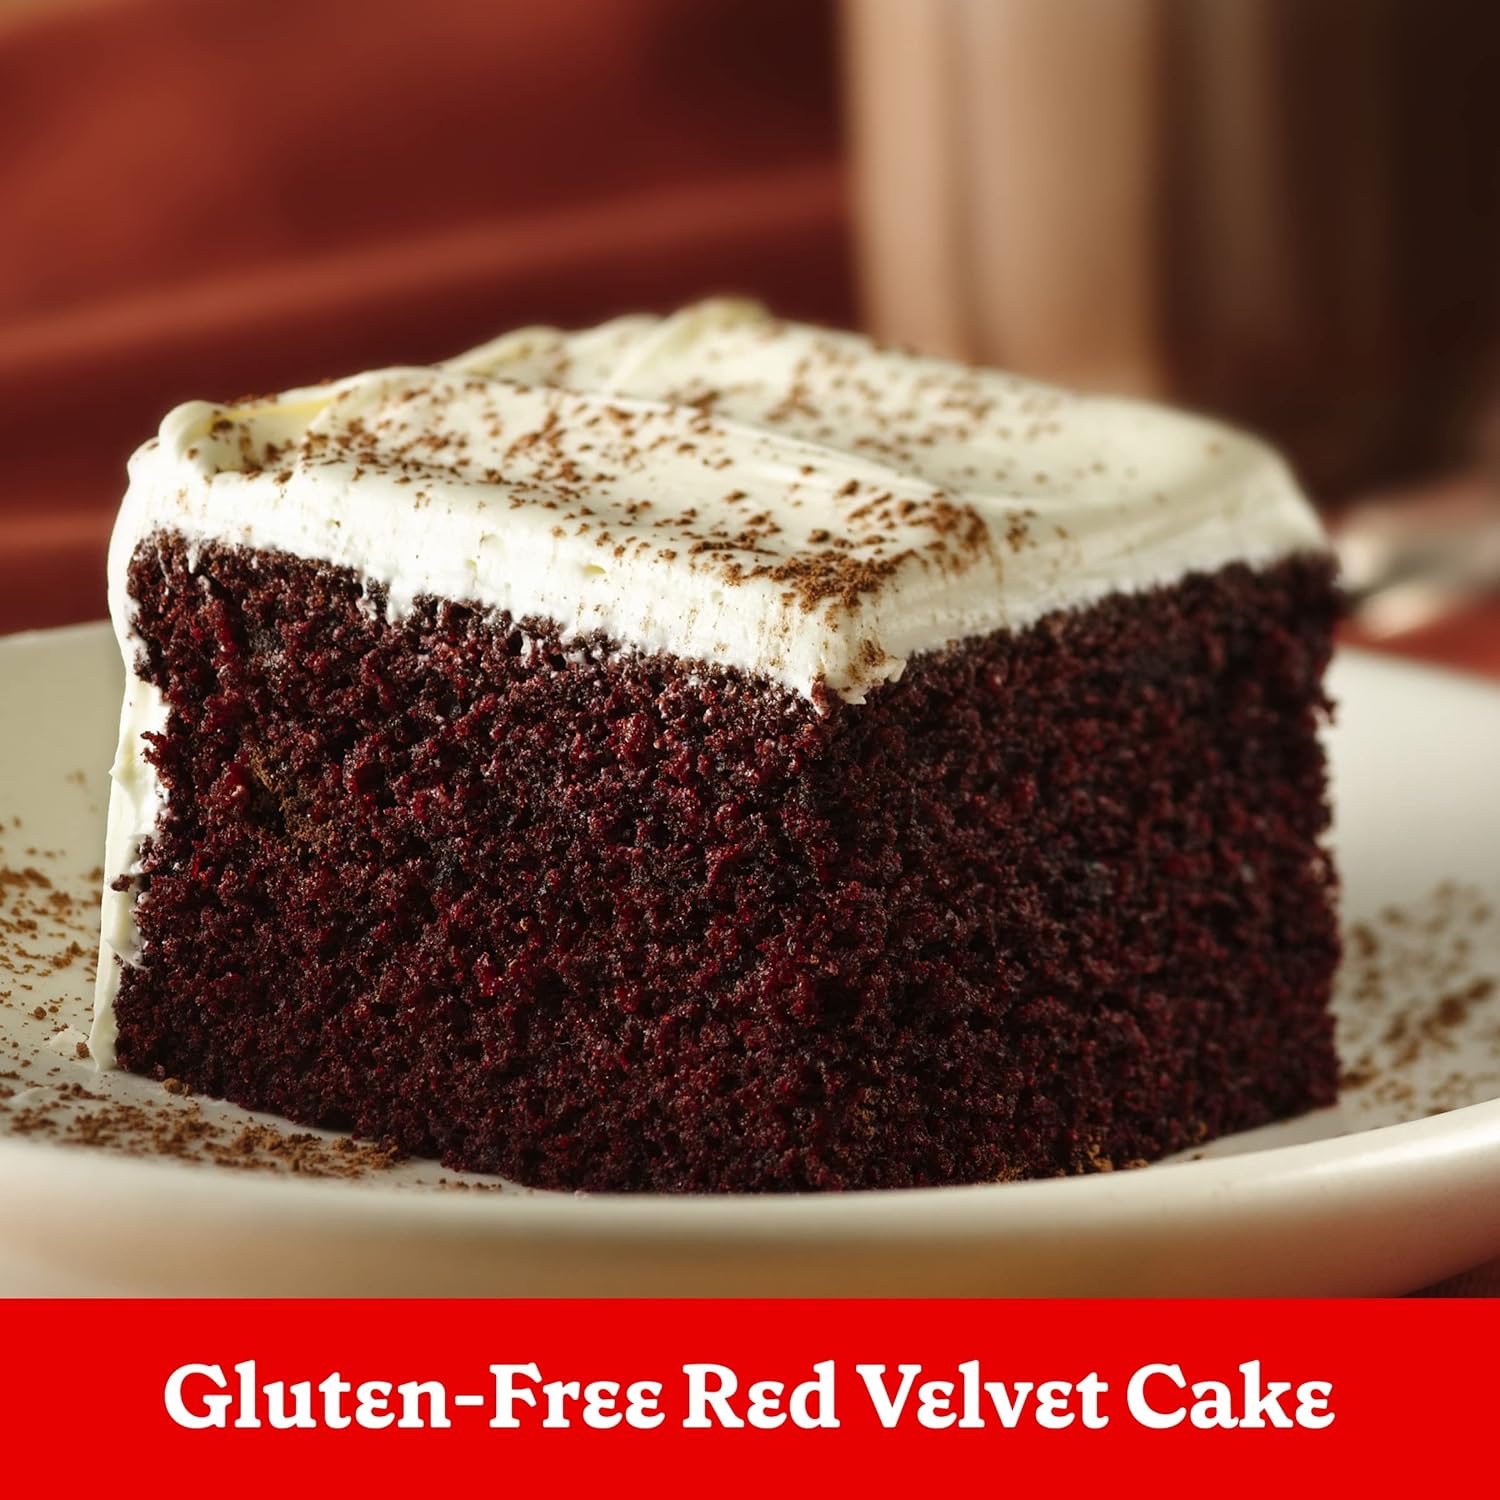 Betty Crocker Gluten Free Devil's Food Cake Mix, 15 oz. (Pack of 6) : Gluten Free Chocolate Cake Mix : Everything Else